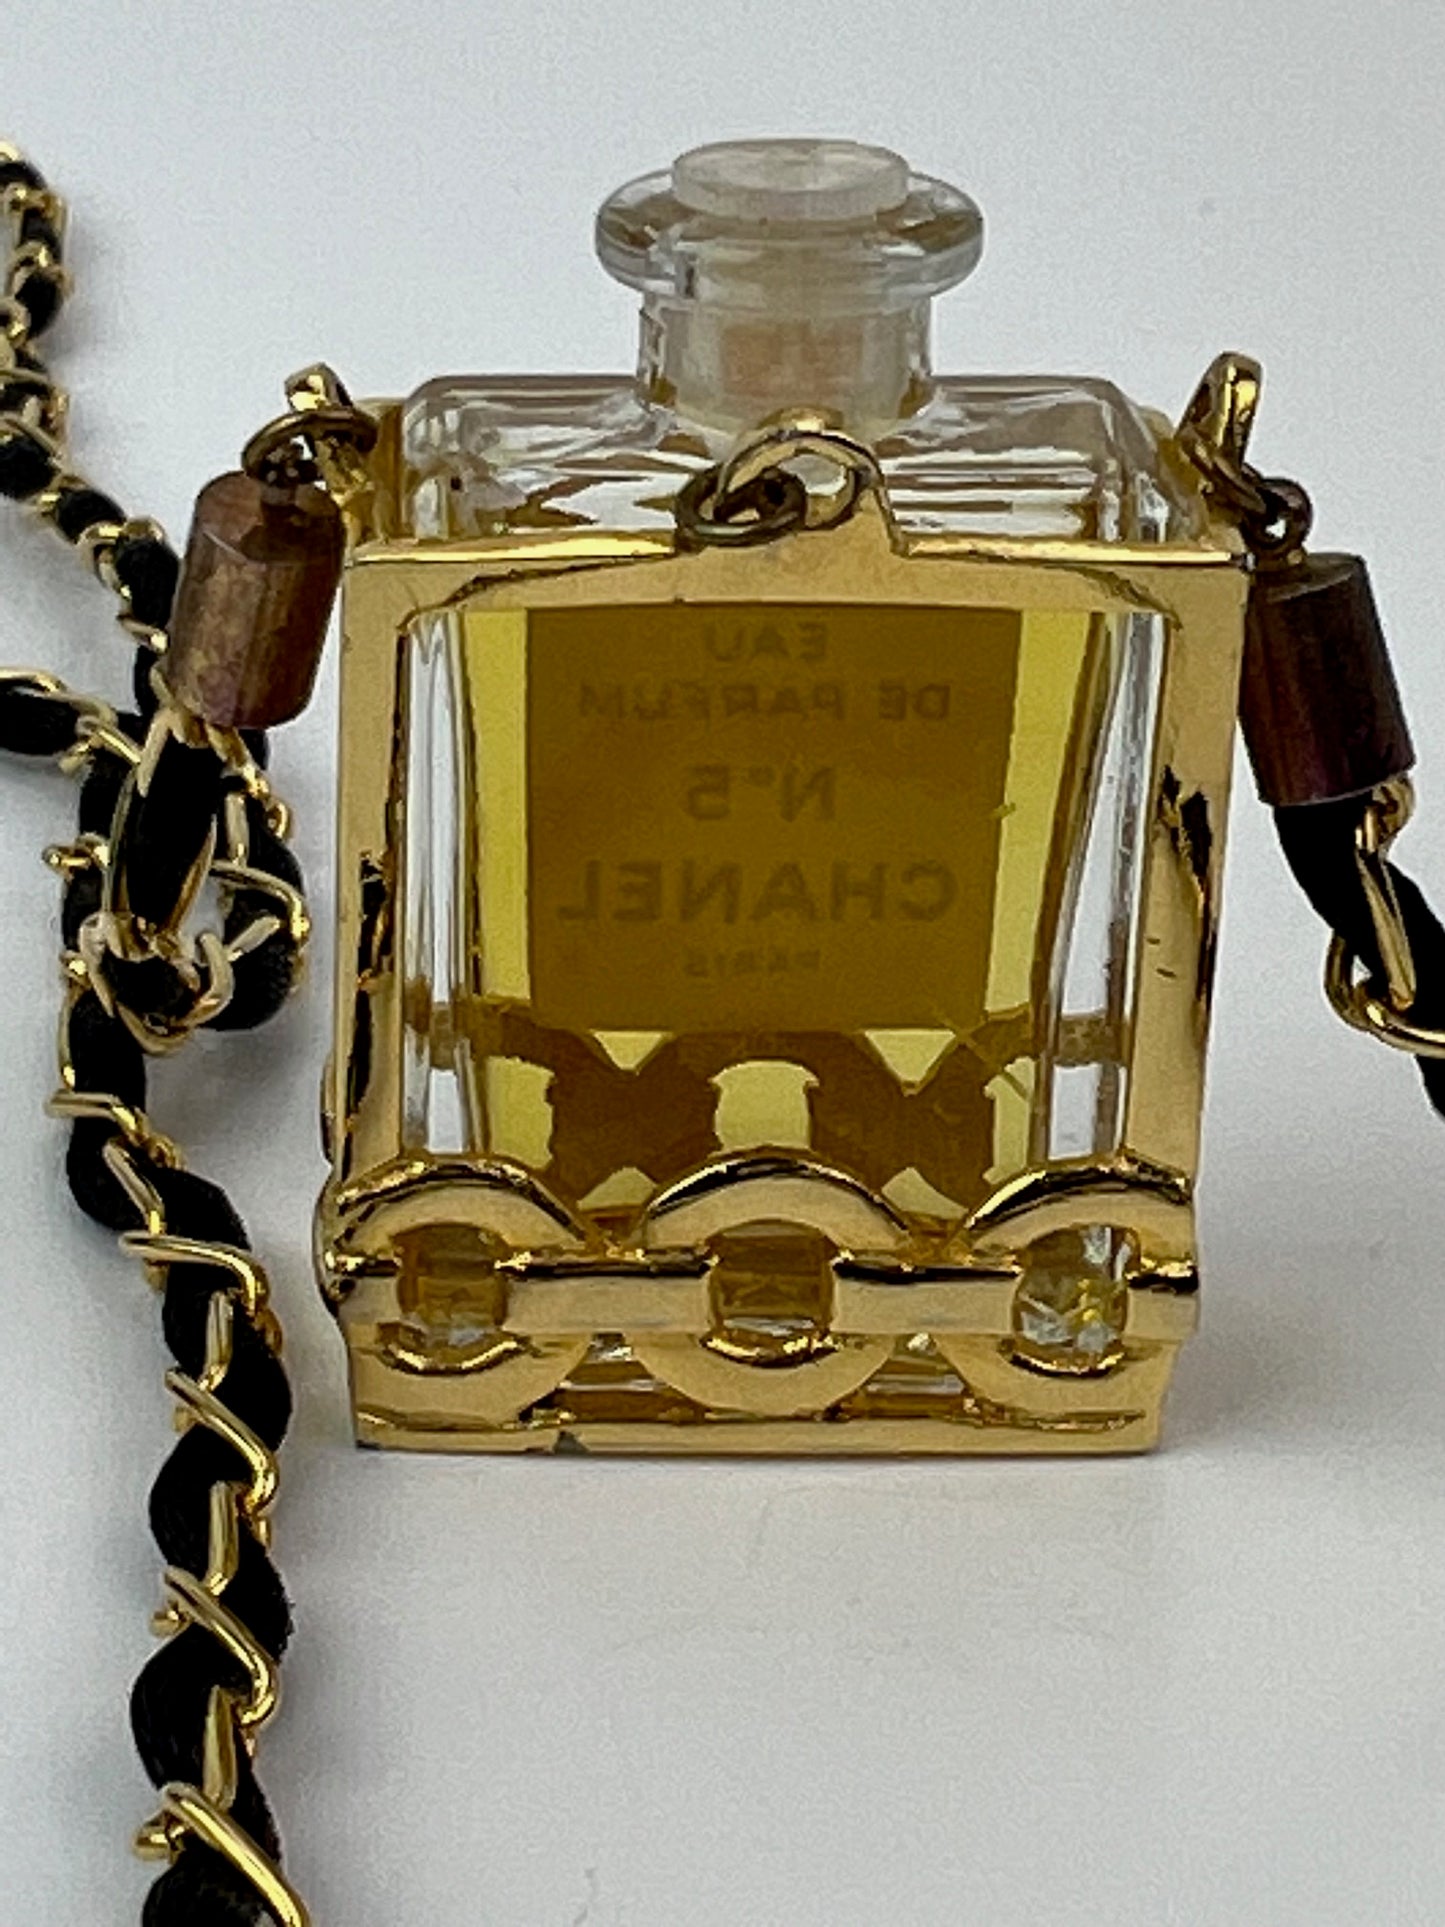 Vintage Chanel Perfume Bottle No. 5